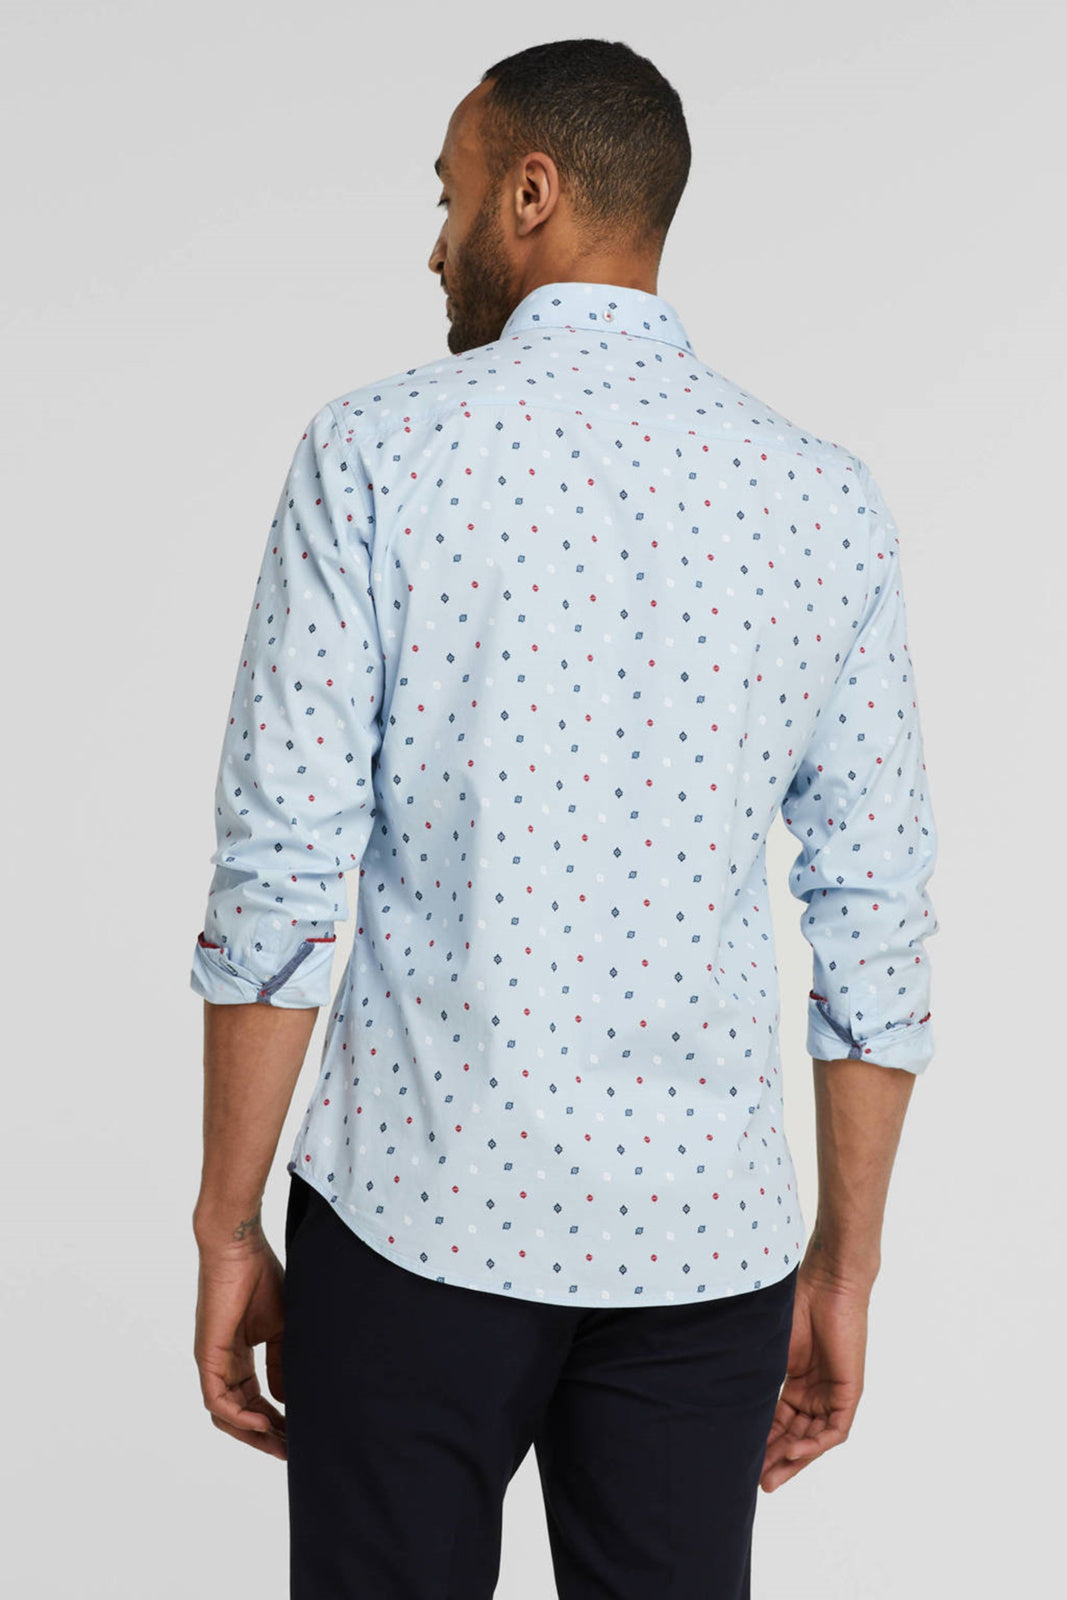 meesteres ervaring ketting Twinlife Regular fit overhemd met all over print – Baggy Choice